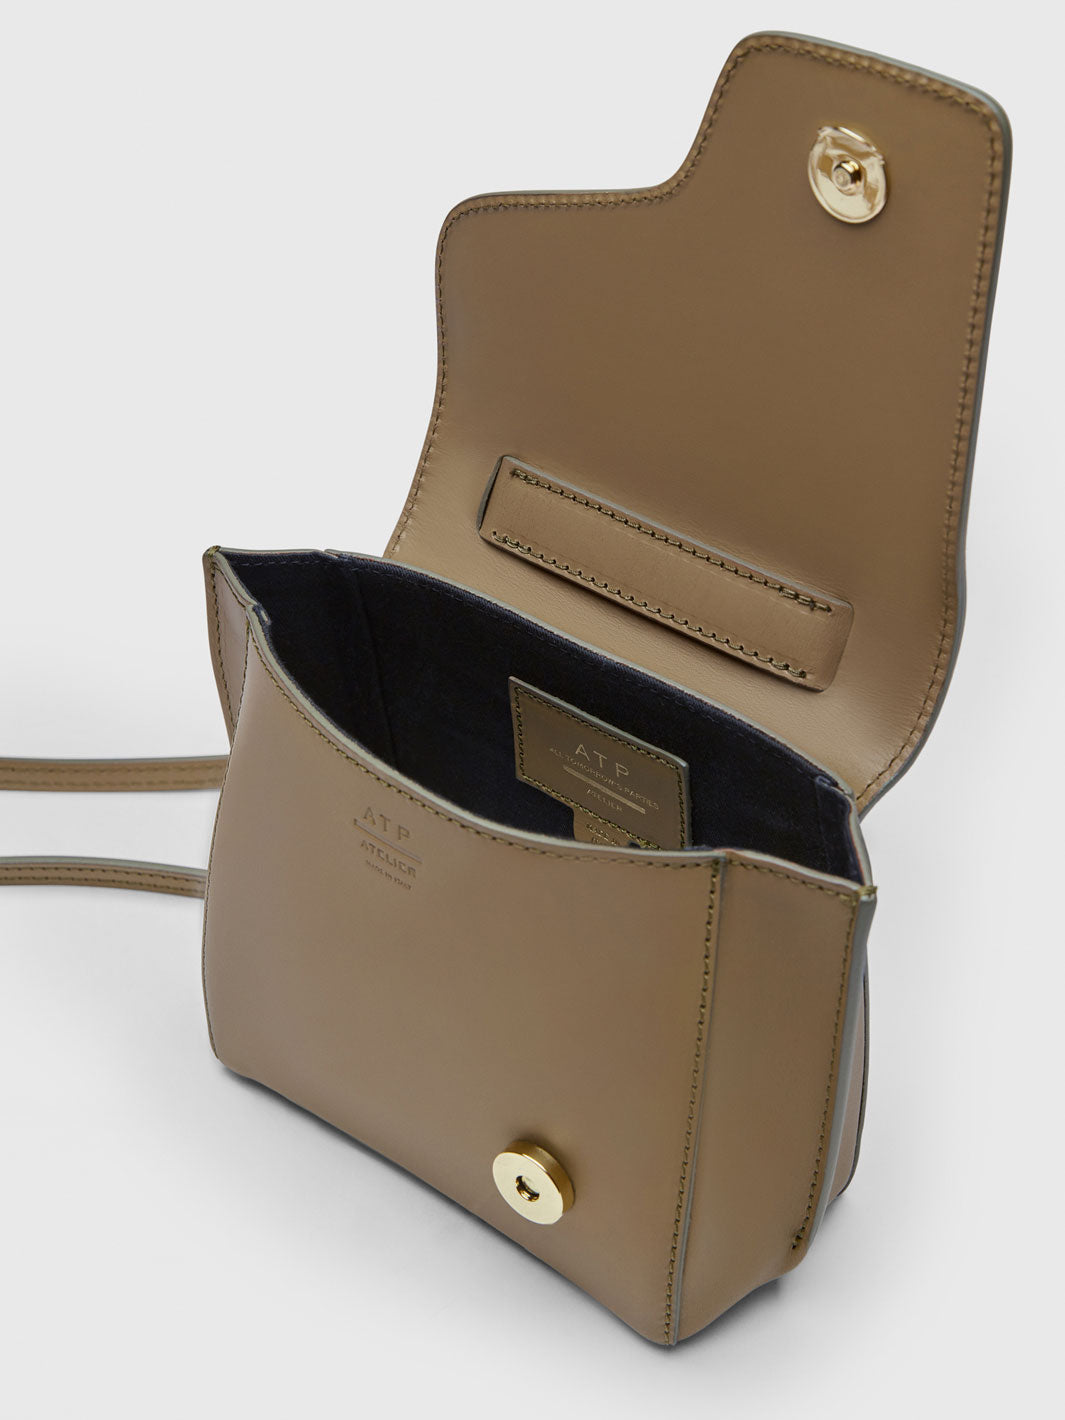 Montalcino Moss Leather Mini handbag